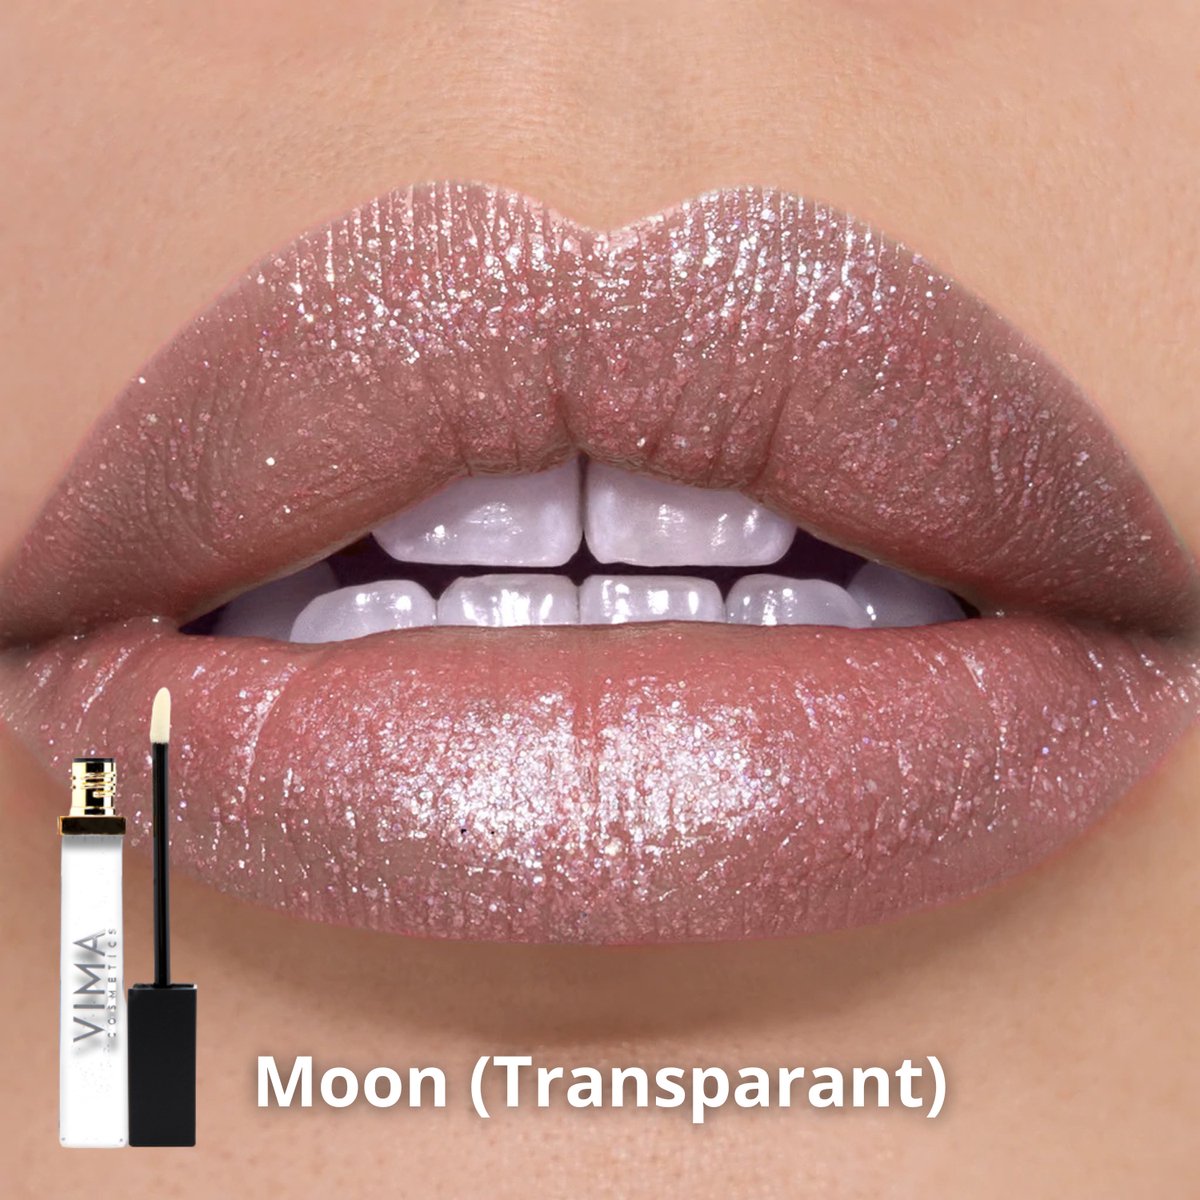 VIMA Lipgloss - Transparant (Moon) - Hydraterend - Creamy - Volumegevende Lipgloss